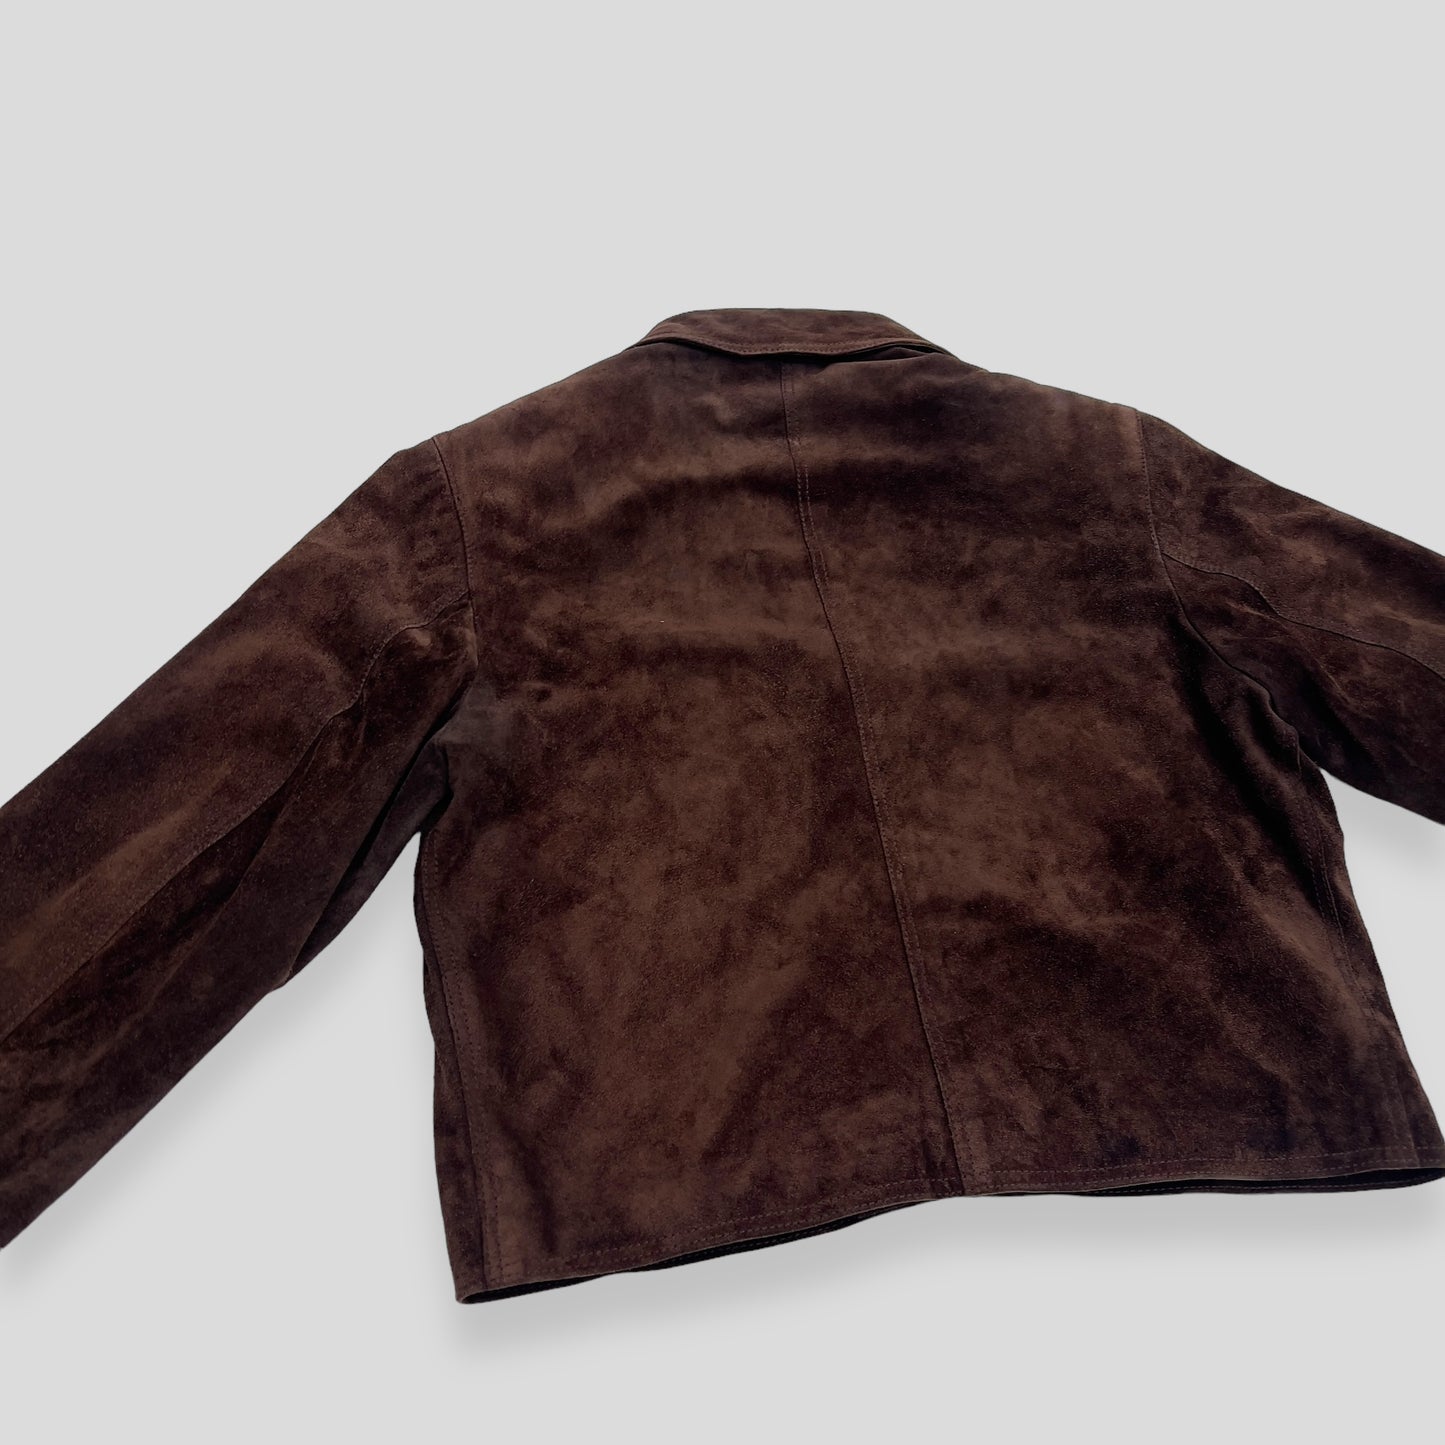 Miu Miu C1994 suede jacket, wooden buttons